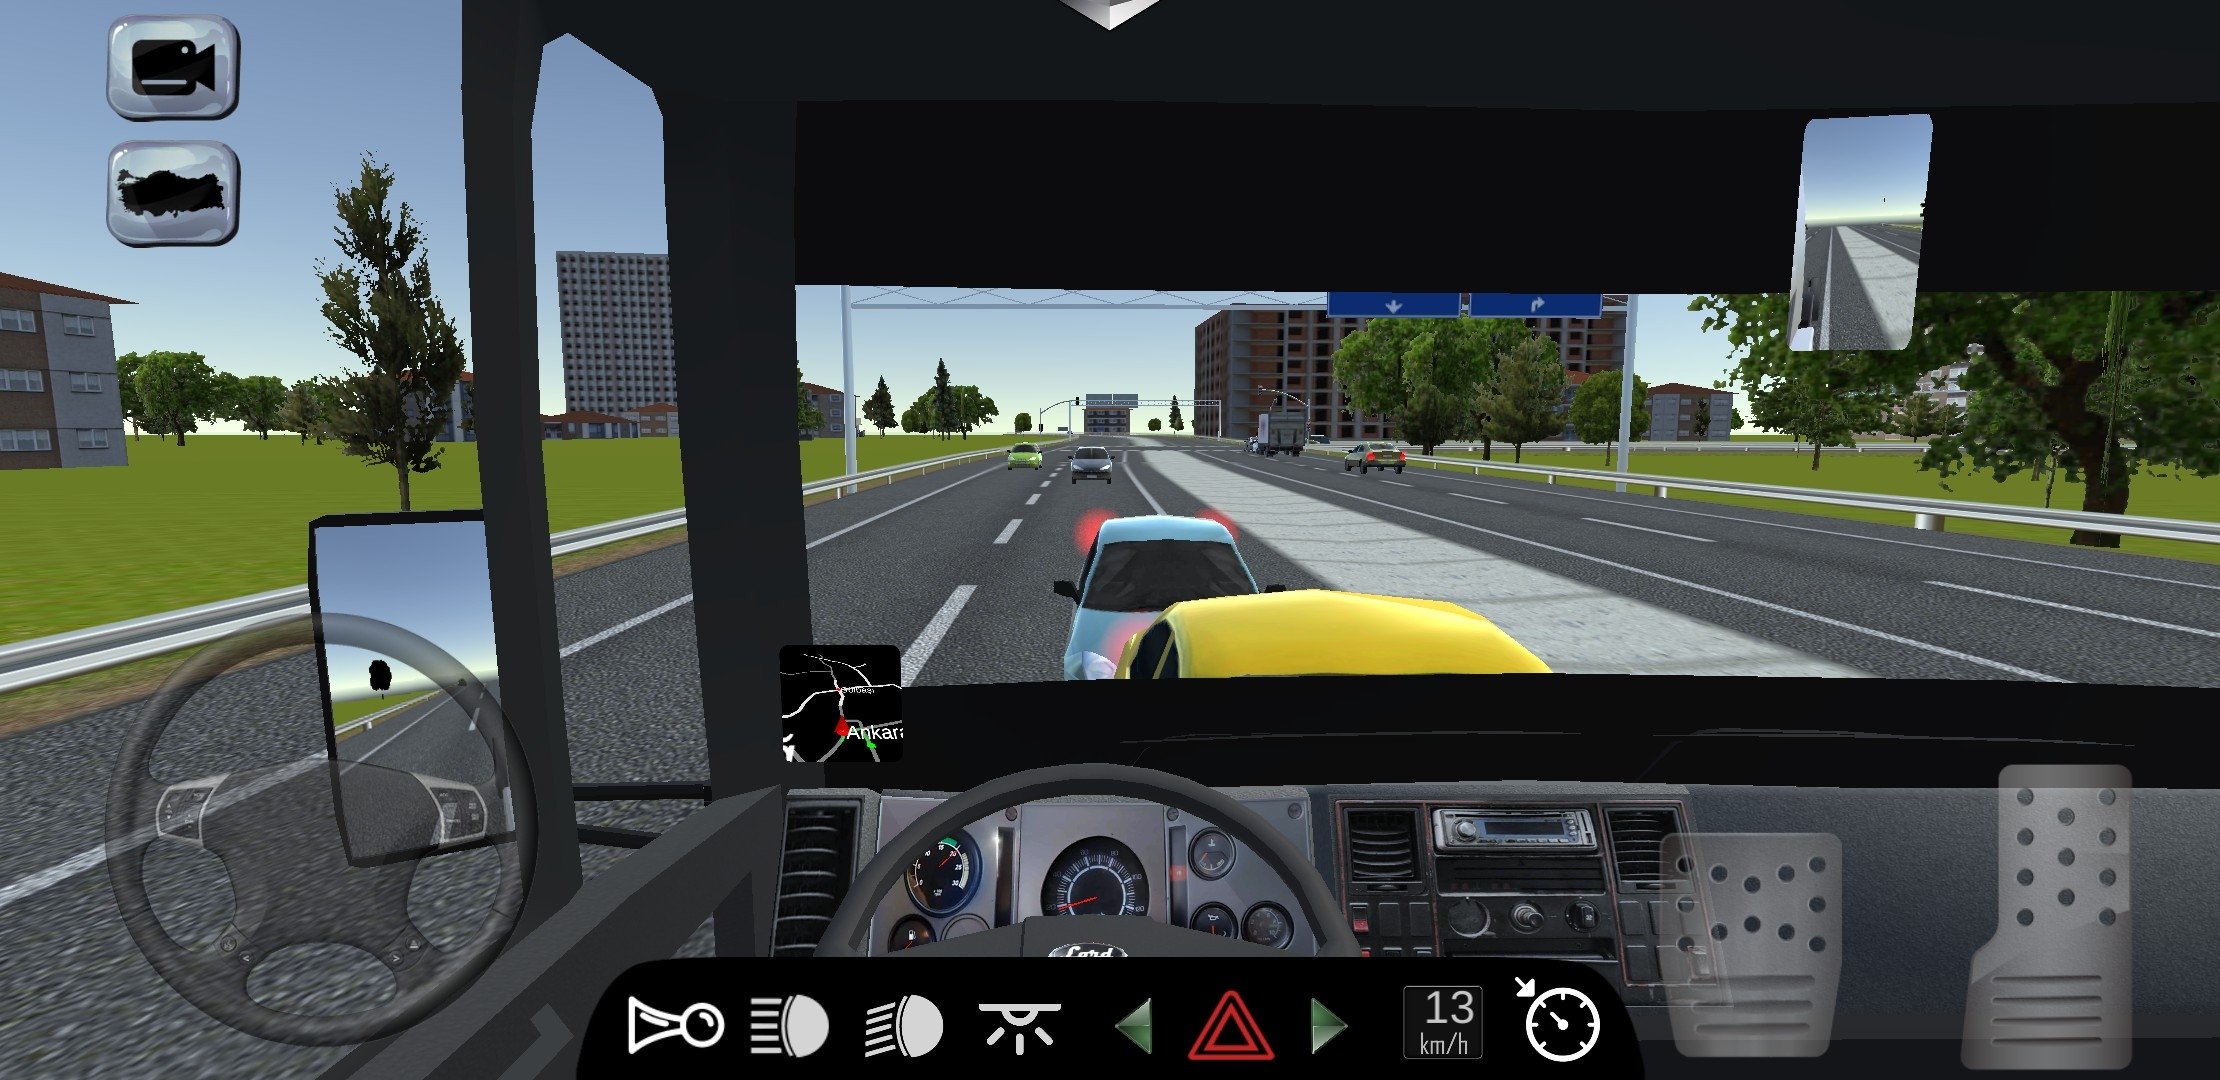 for windows download Cargo Simulator 2023